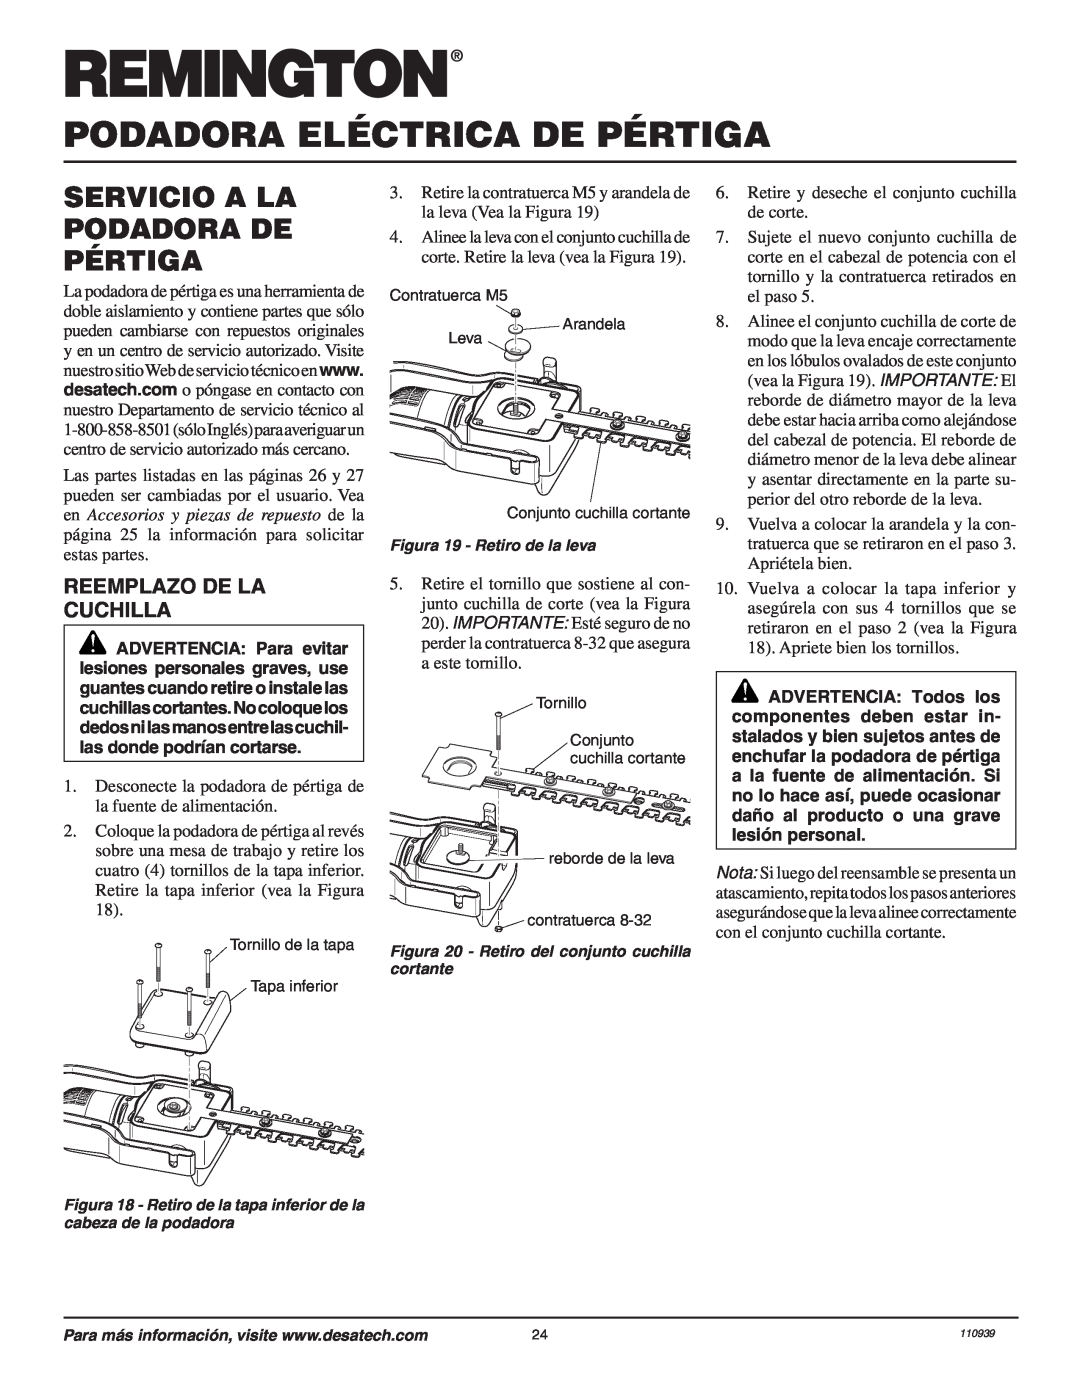 Desa 110946-01A owner manual Servicio A La Podadora De Pértiga, Reemplazo De La Cuchilla, Podadora Eléctrica De Pértiga 